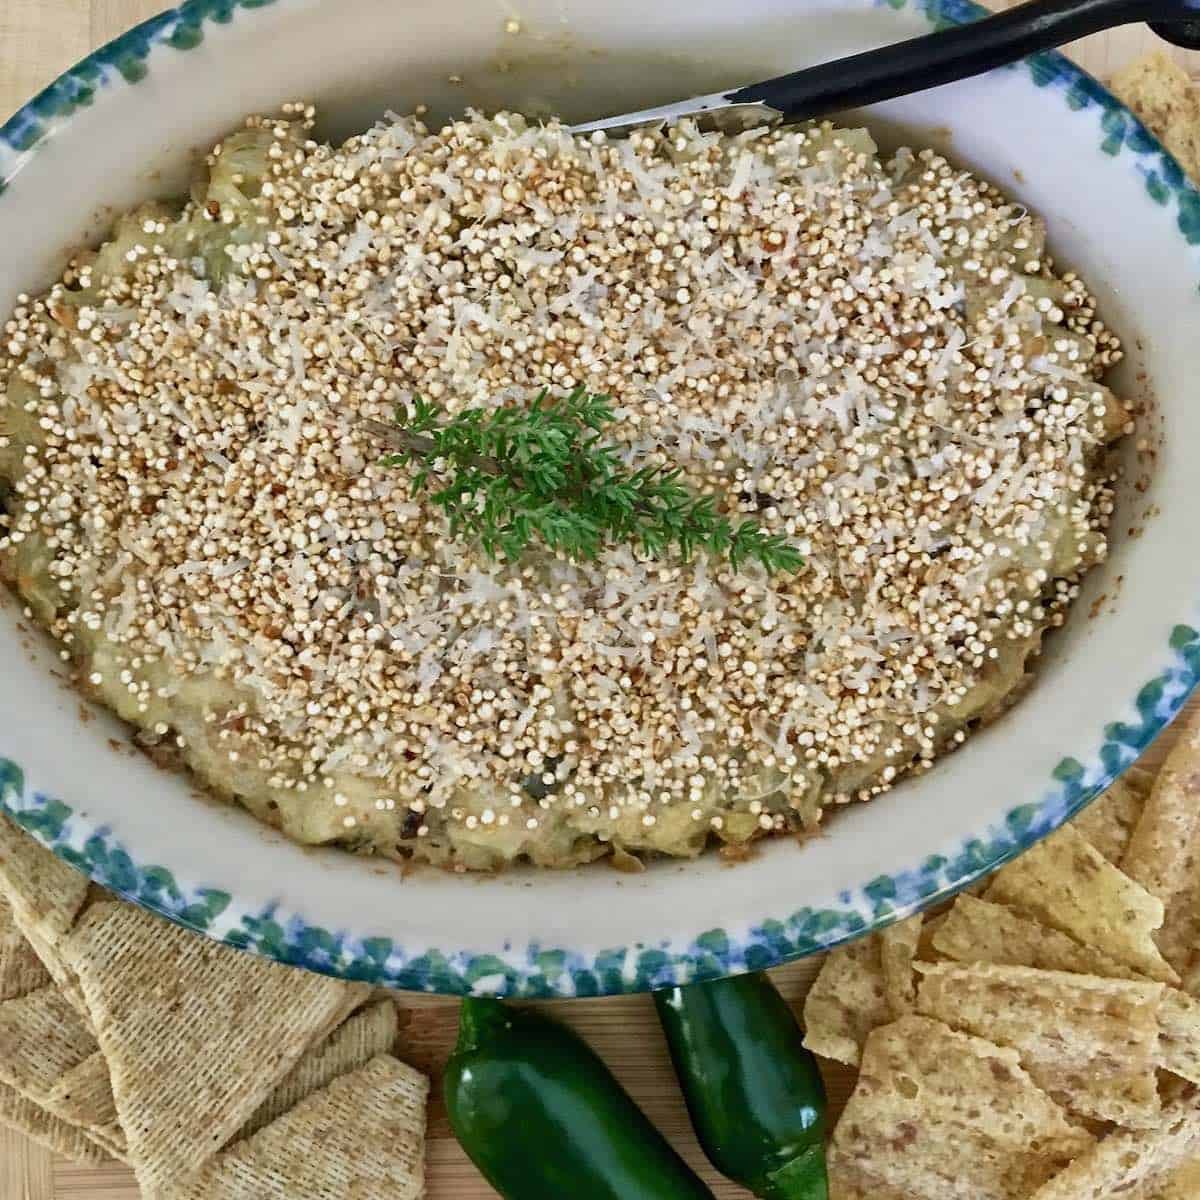 Artichoke quinoa dip.